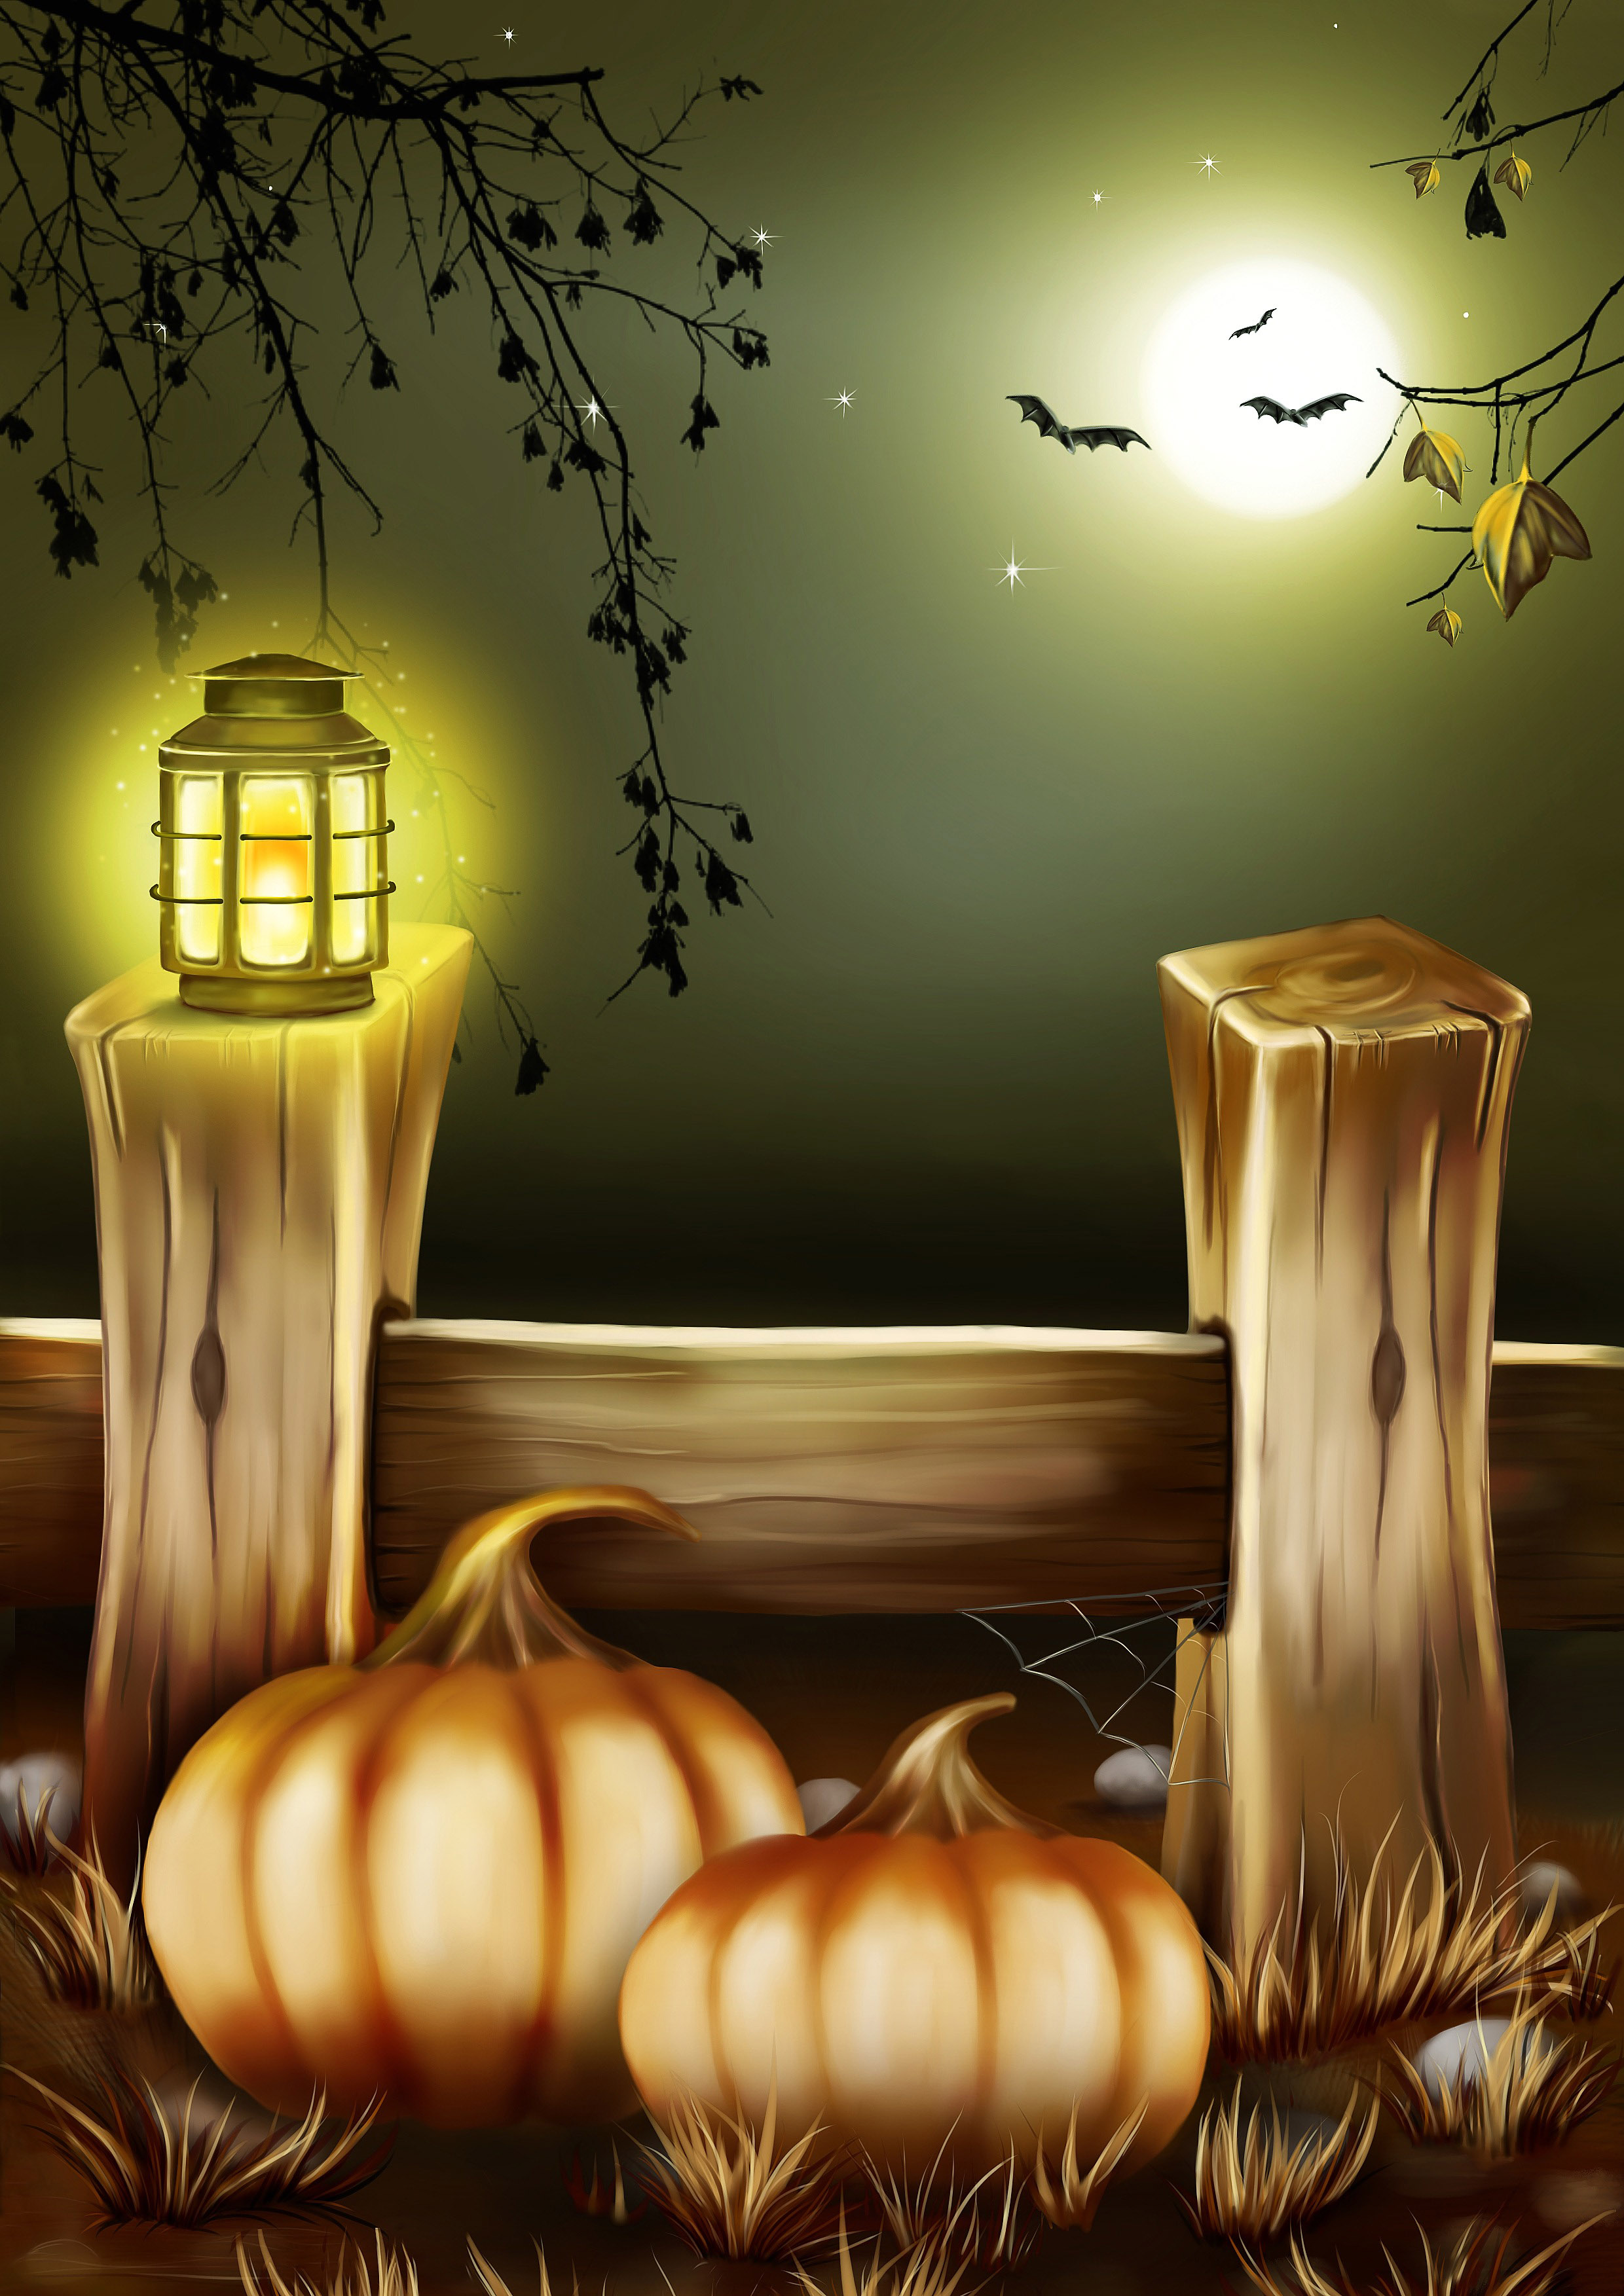 Lights, Pumpkins, and Bats under a full moon Halloween scene image - Free stock photo - Public ...